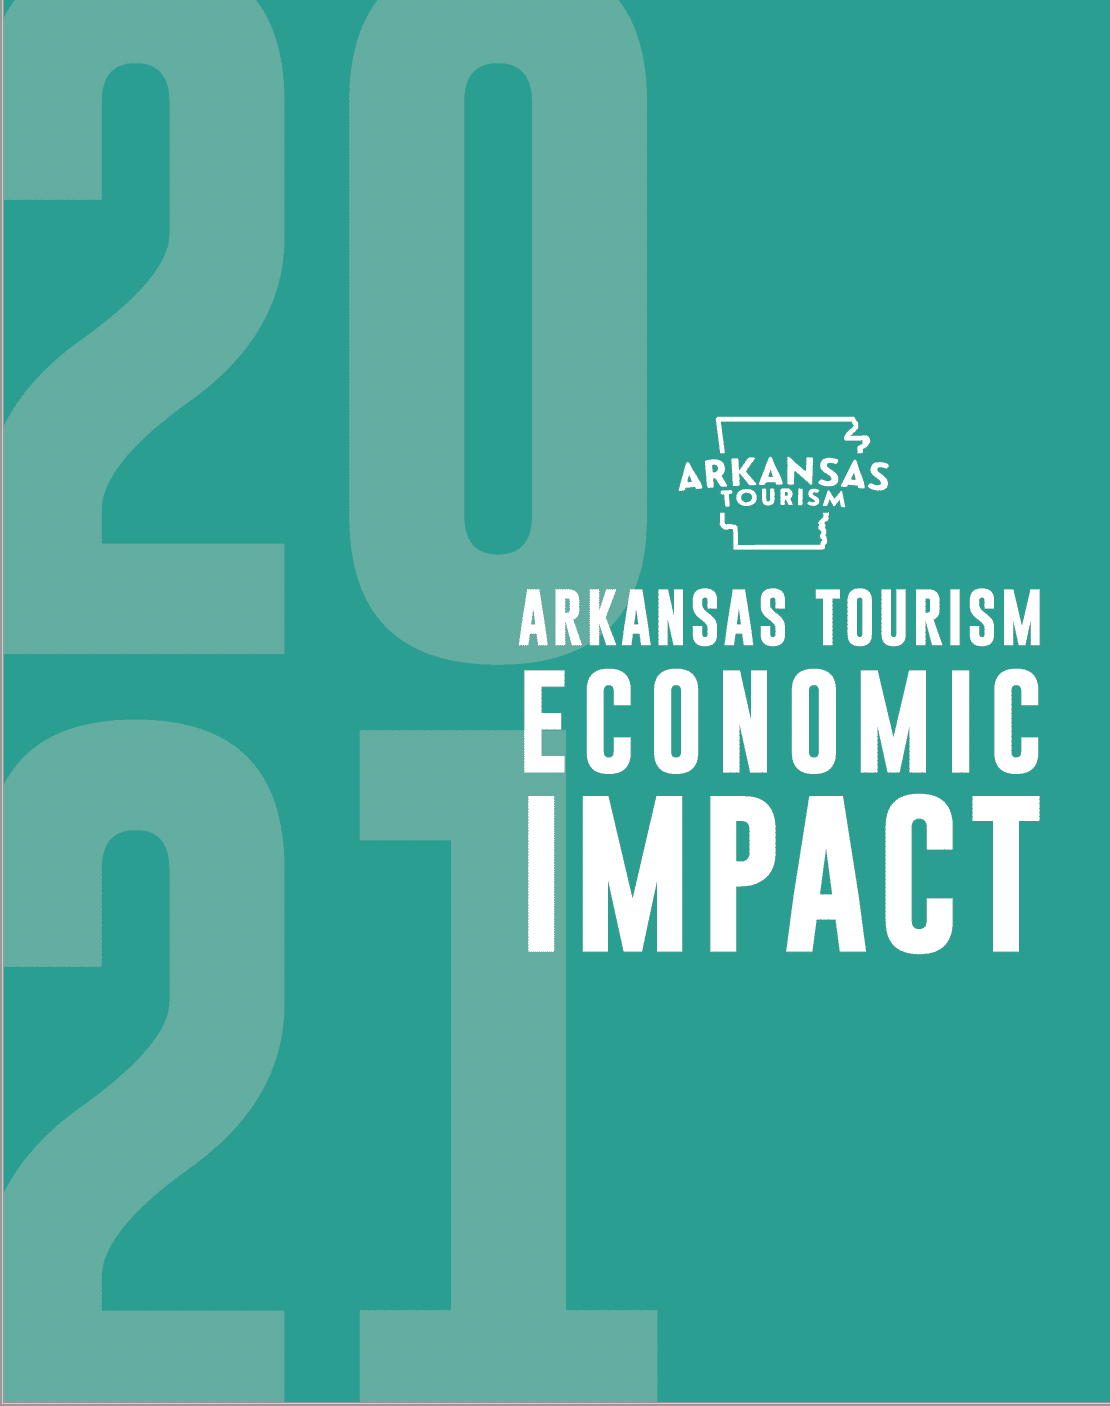 arkansas-tourism-releases-2021-economic-impact-report